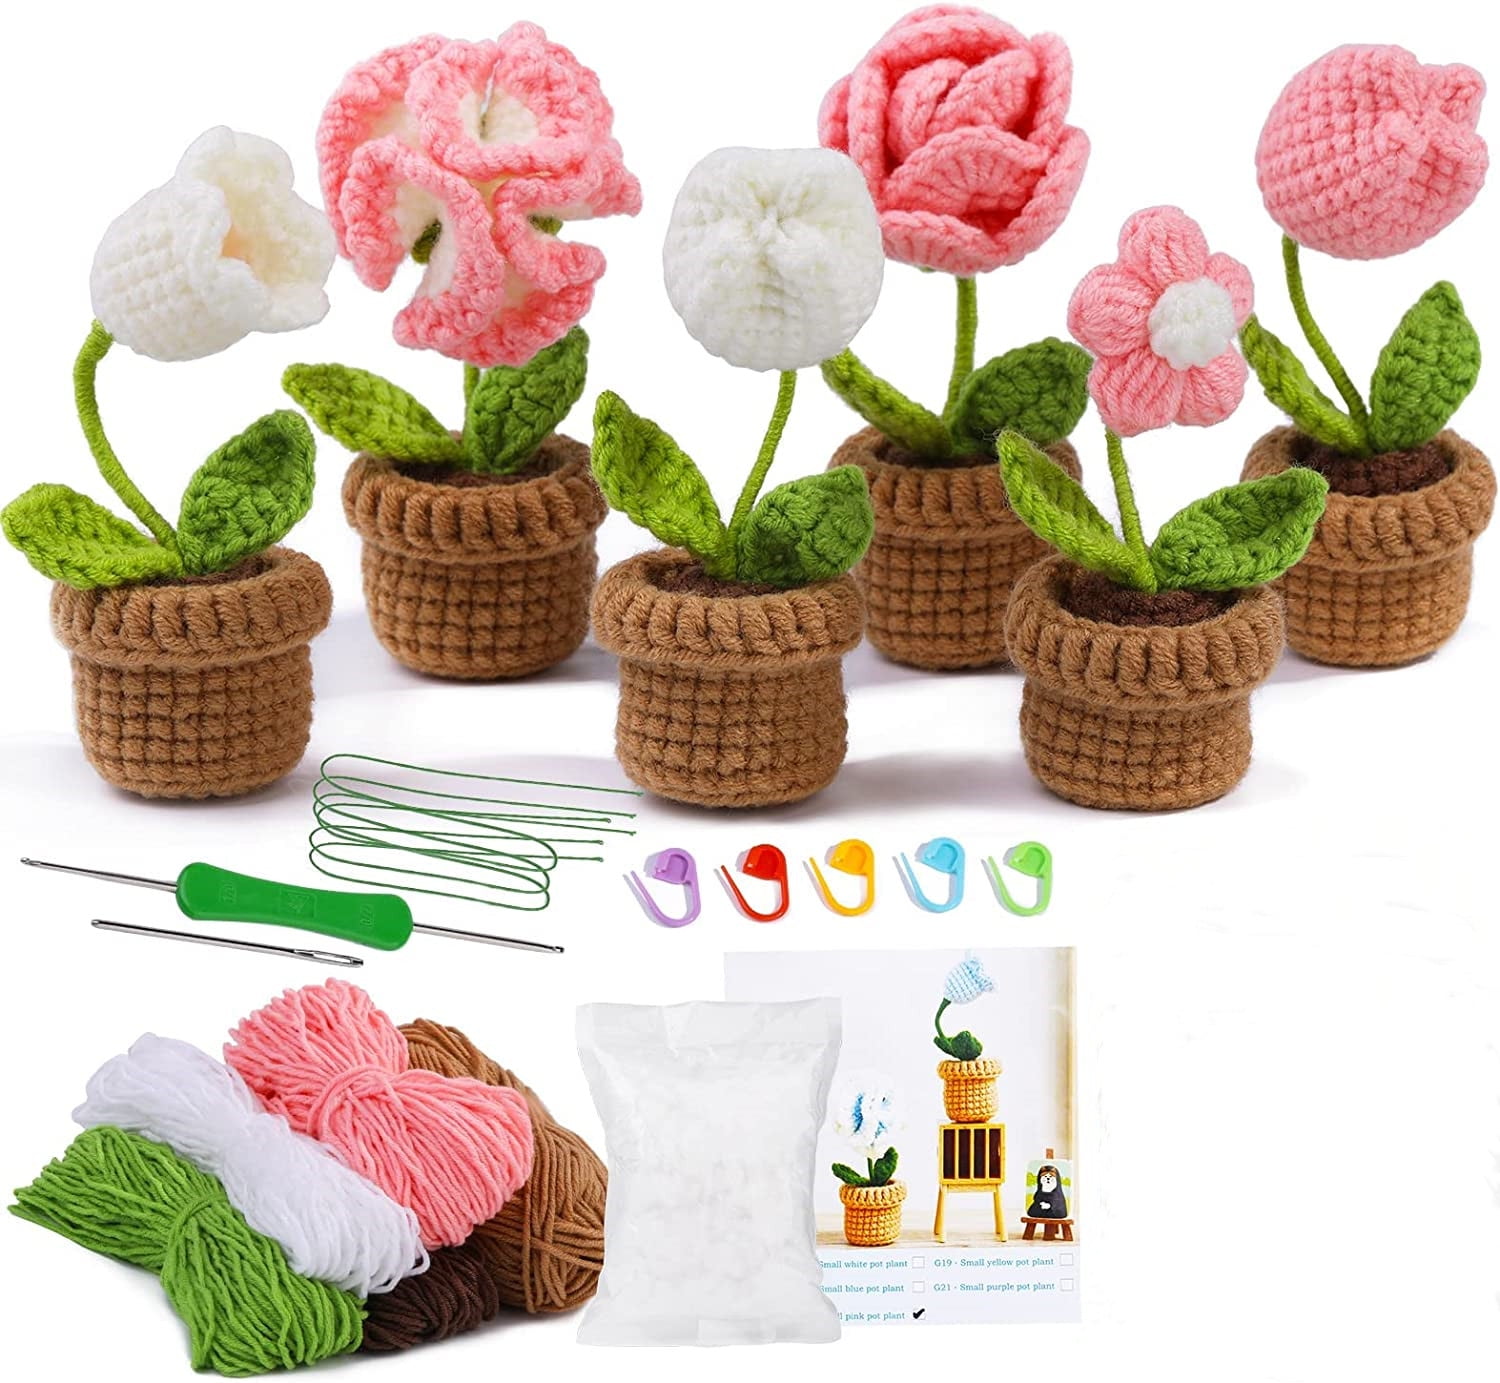  Qunland Crochet Kit for Beginners, 6 Pcs Potted